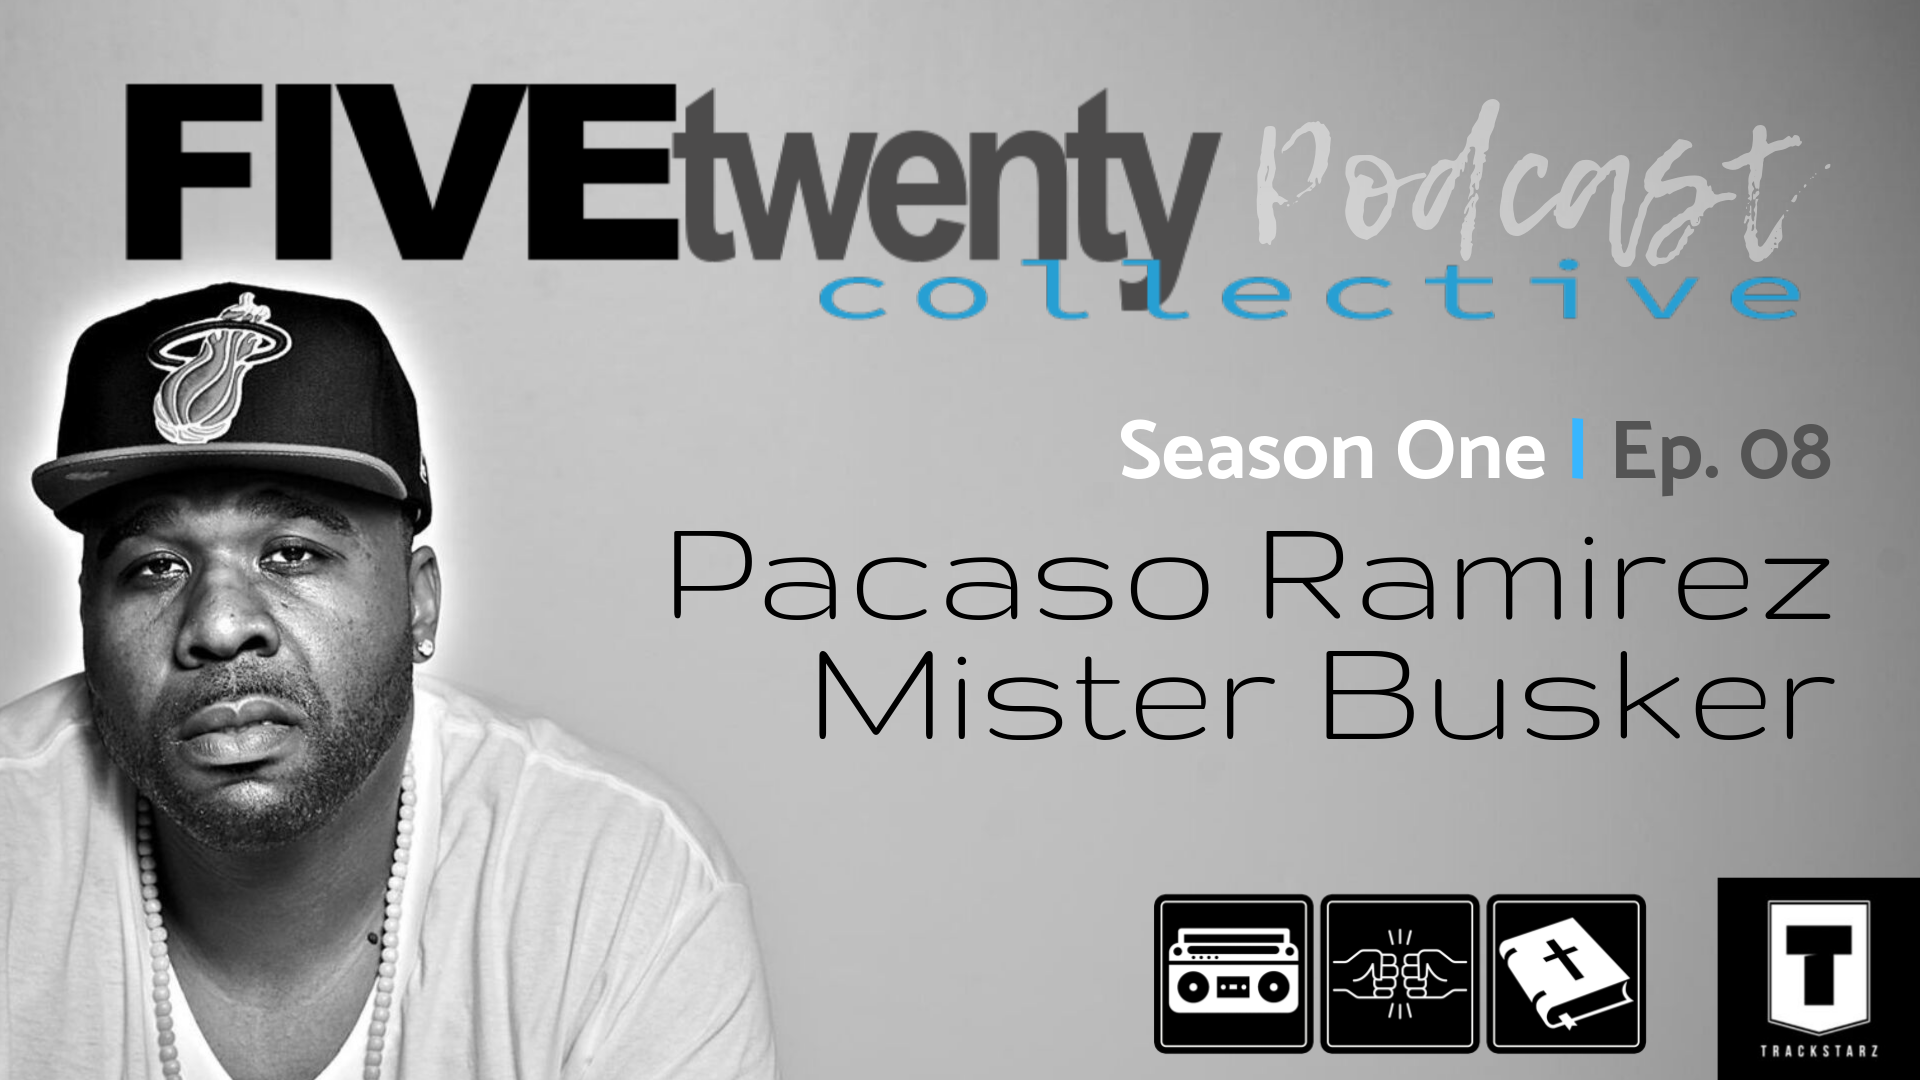 Season One | Ep. 08: @PacasoRamirez @MisterBusker @FiveTwentyCHH @EricBoston3 @Iam_NateDogg